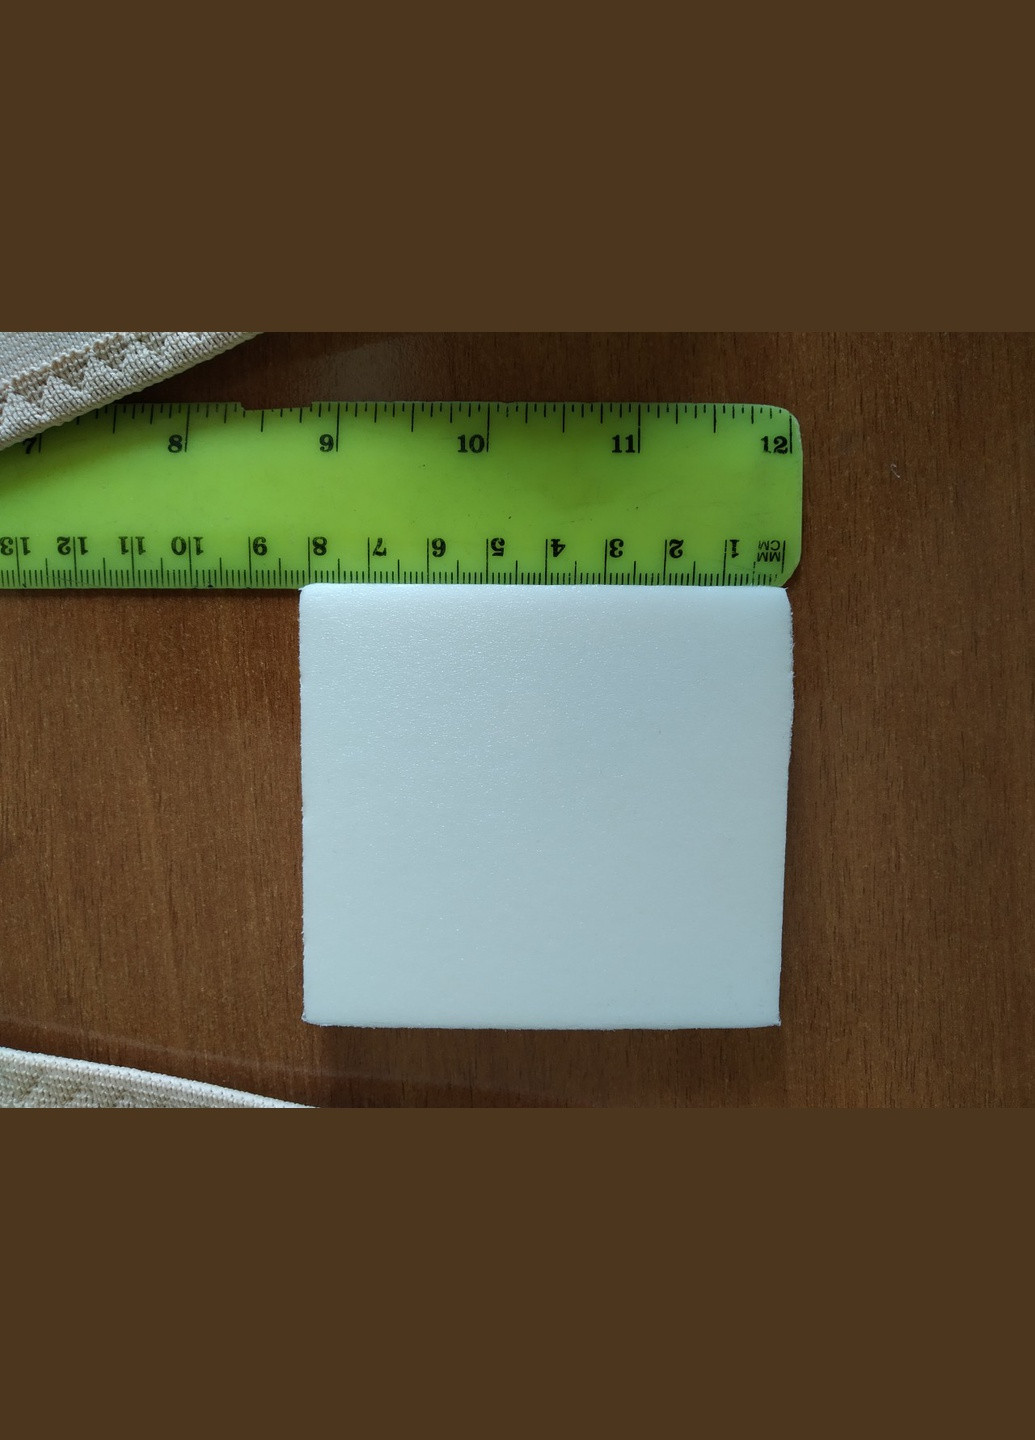 Пупочный грыжевой пояс бандаж медицинский эластичный грыжевый для пупочной грыжи ВIТАЛI размер № (2952) Віталі (264209217)